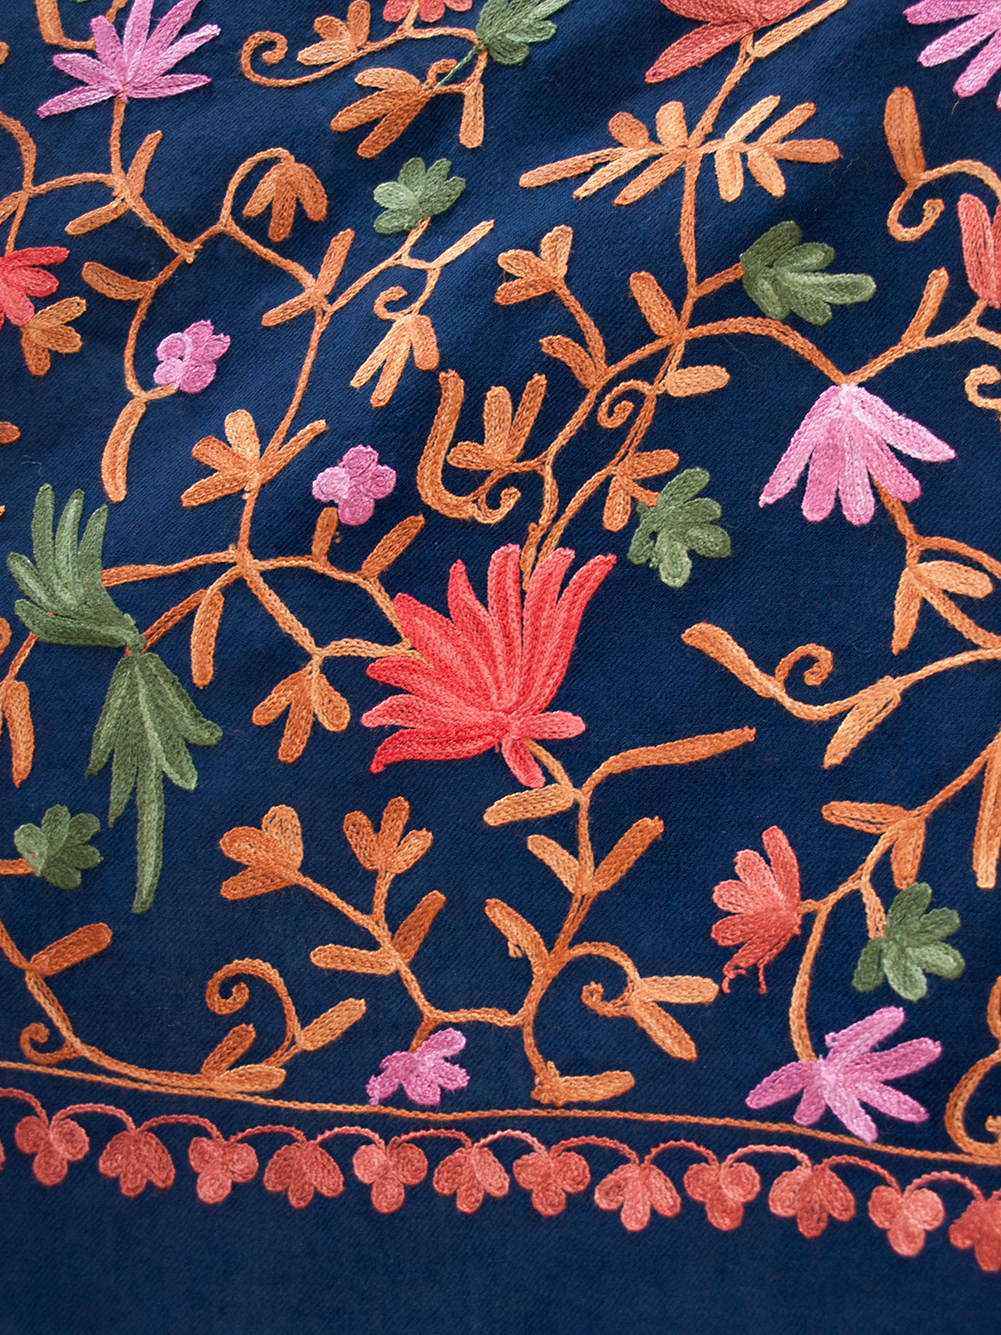 http://heritagetradingonline.com/BK/B14-AM-404-pashmina-crewel-embroidered/2.jpg